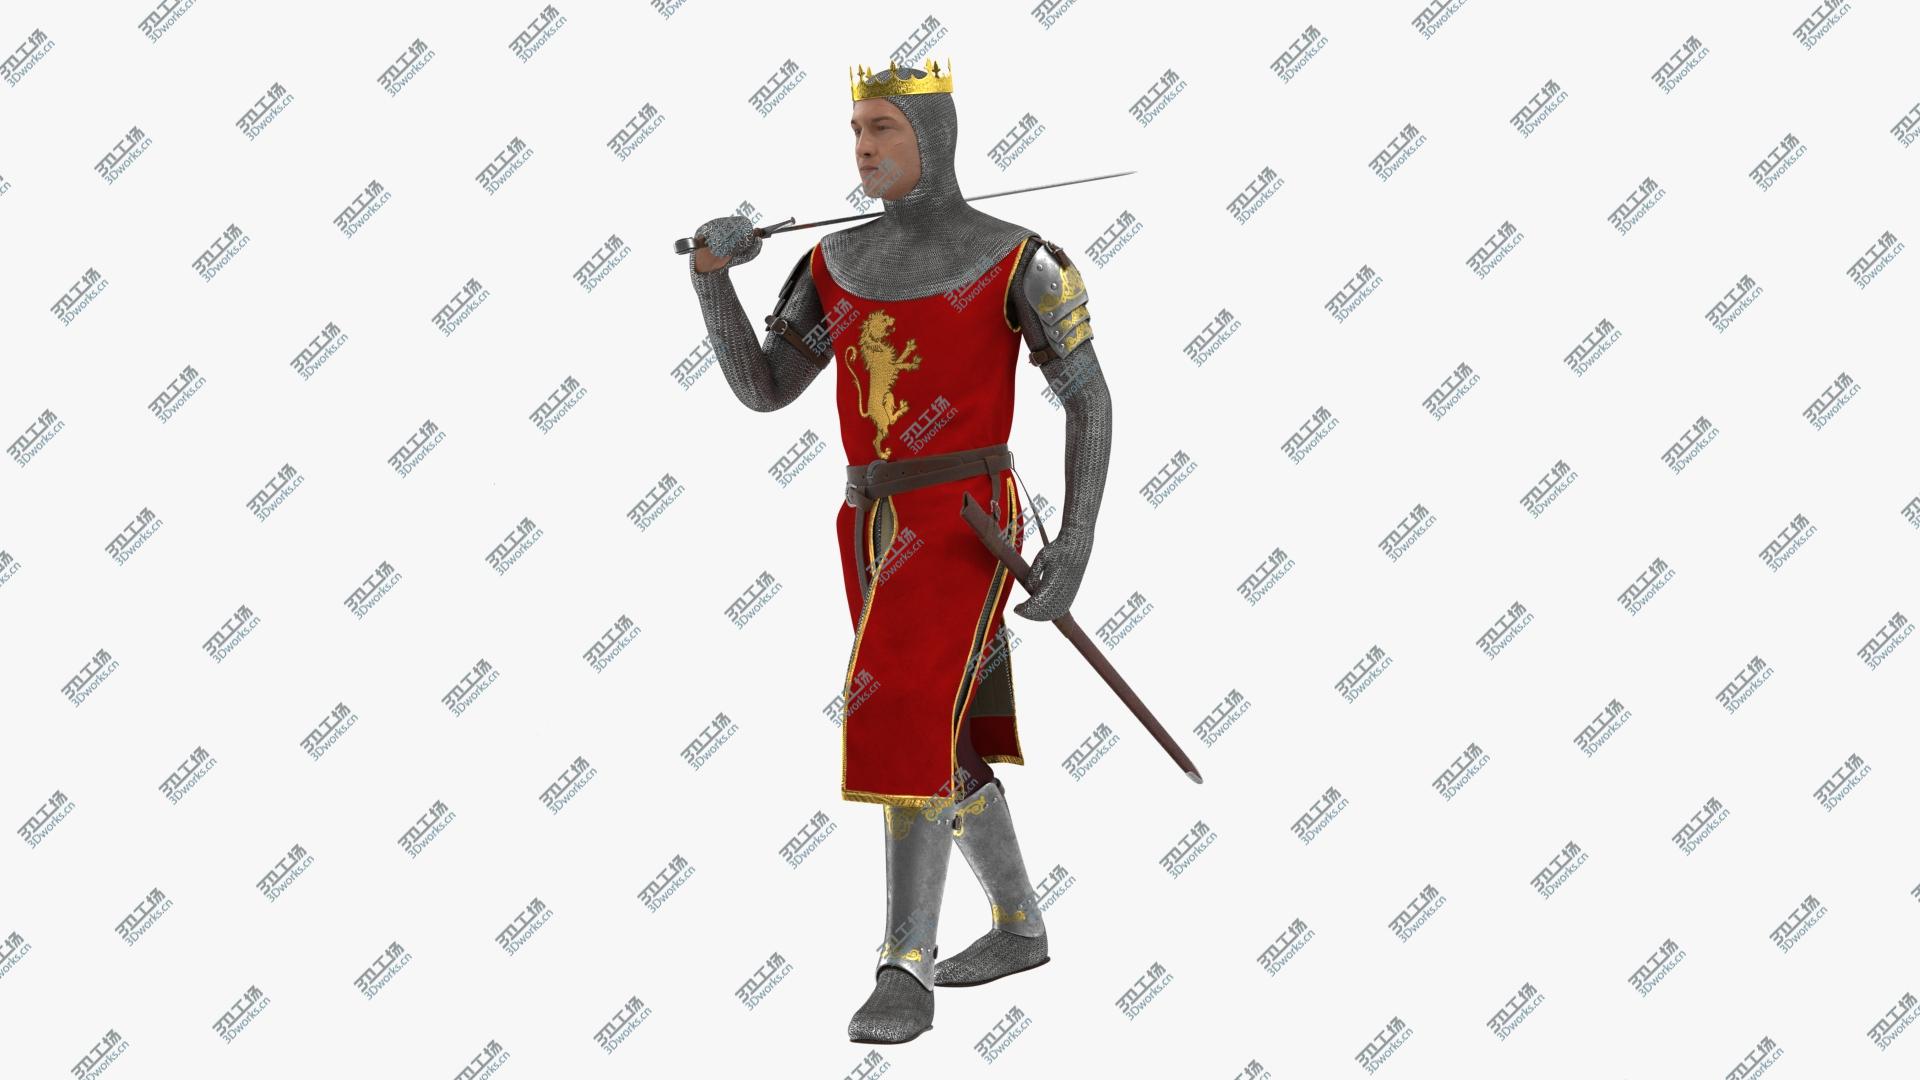 images/goods_img/202104093/3D Crusader Knight King Walking Pose model/2.jpg